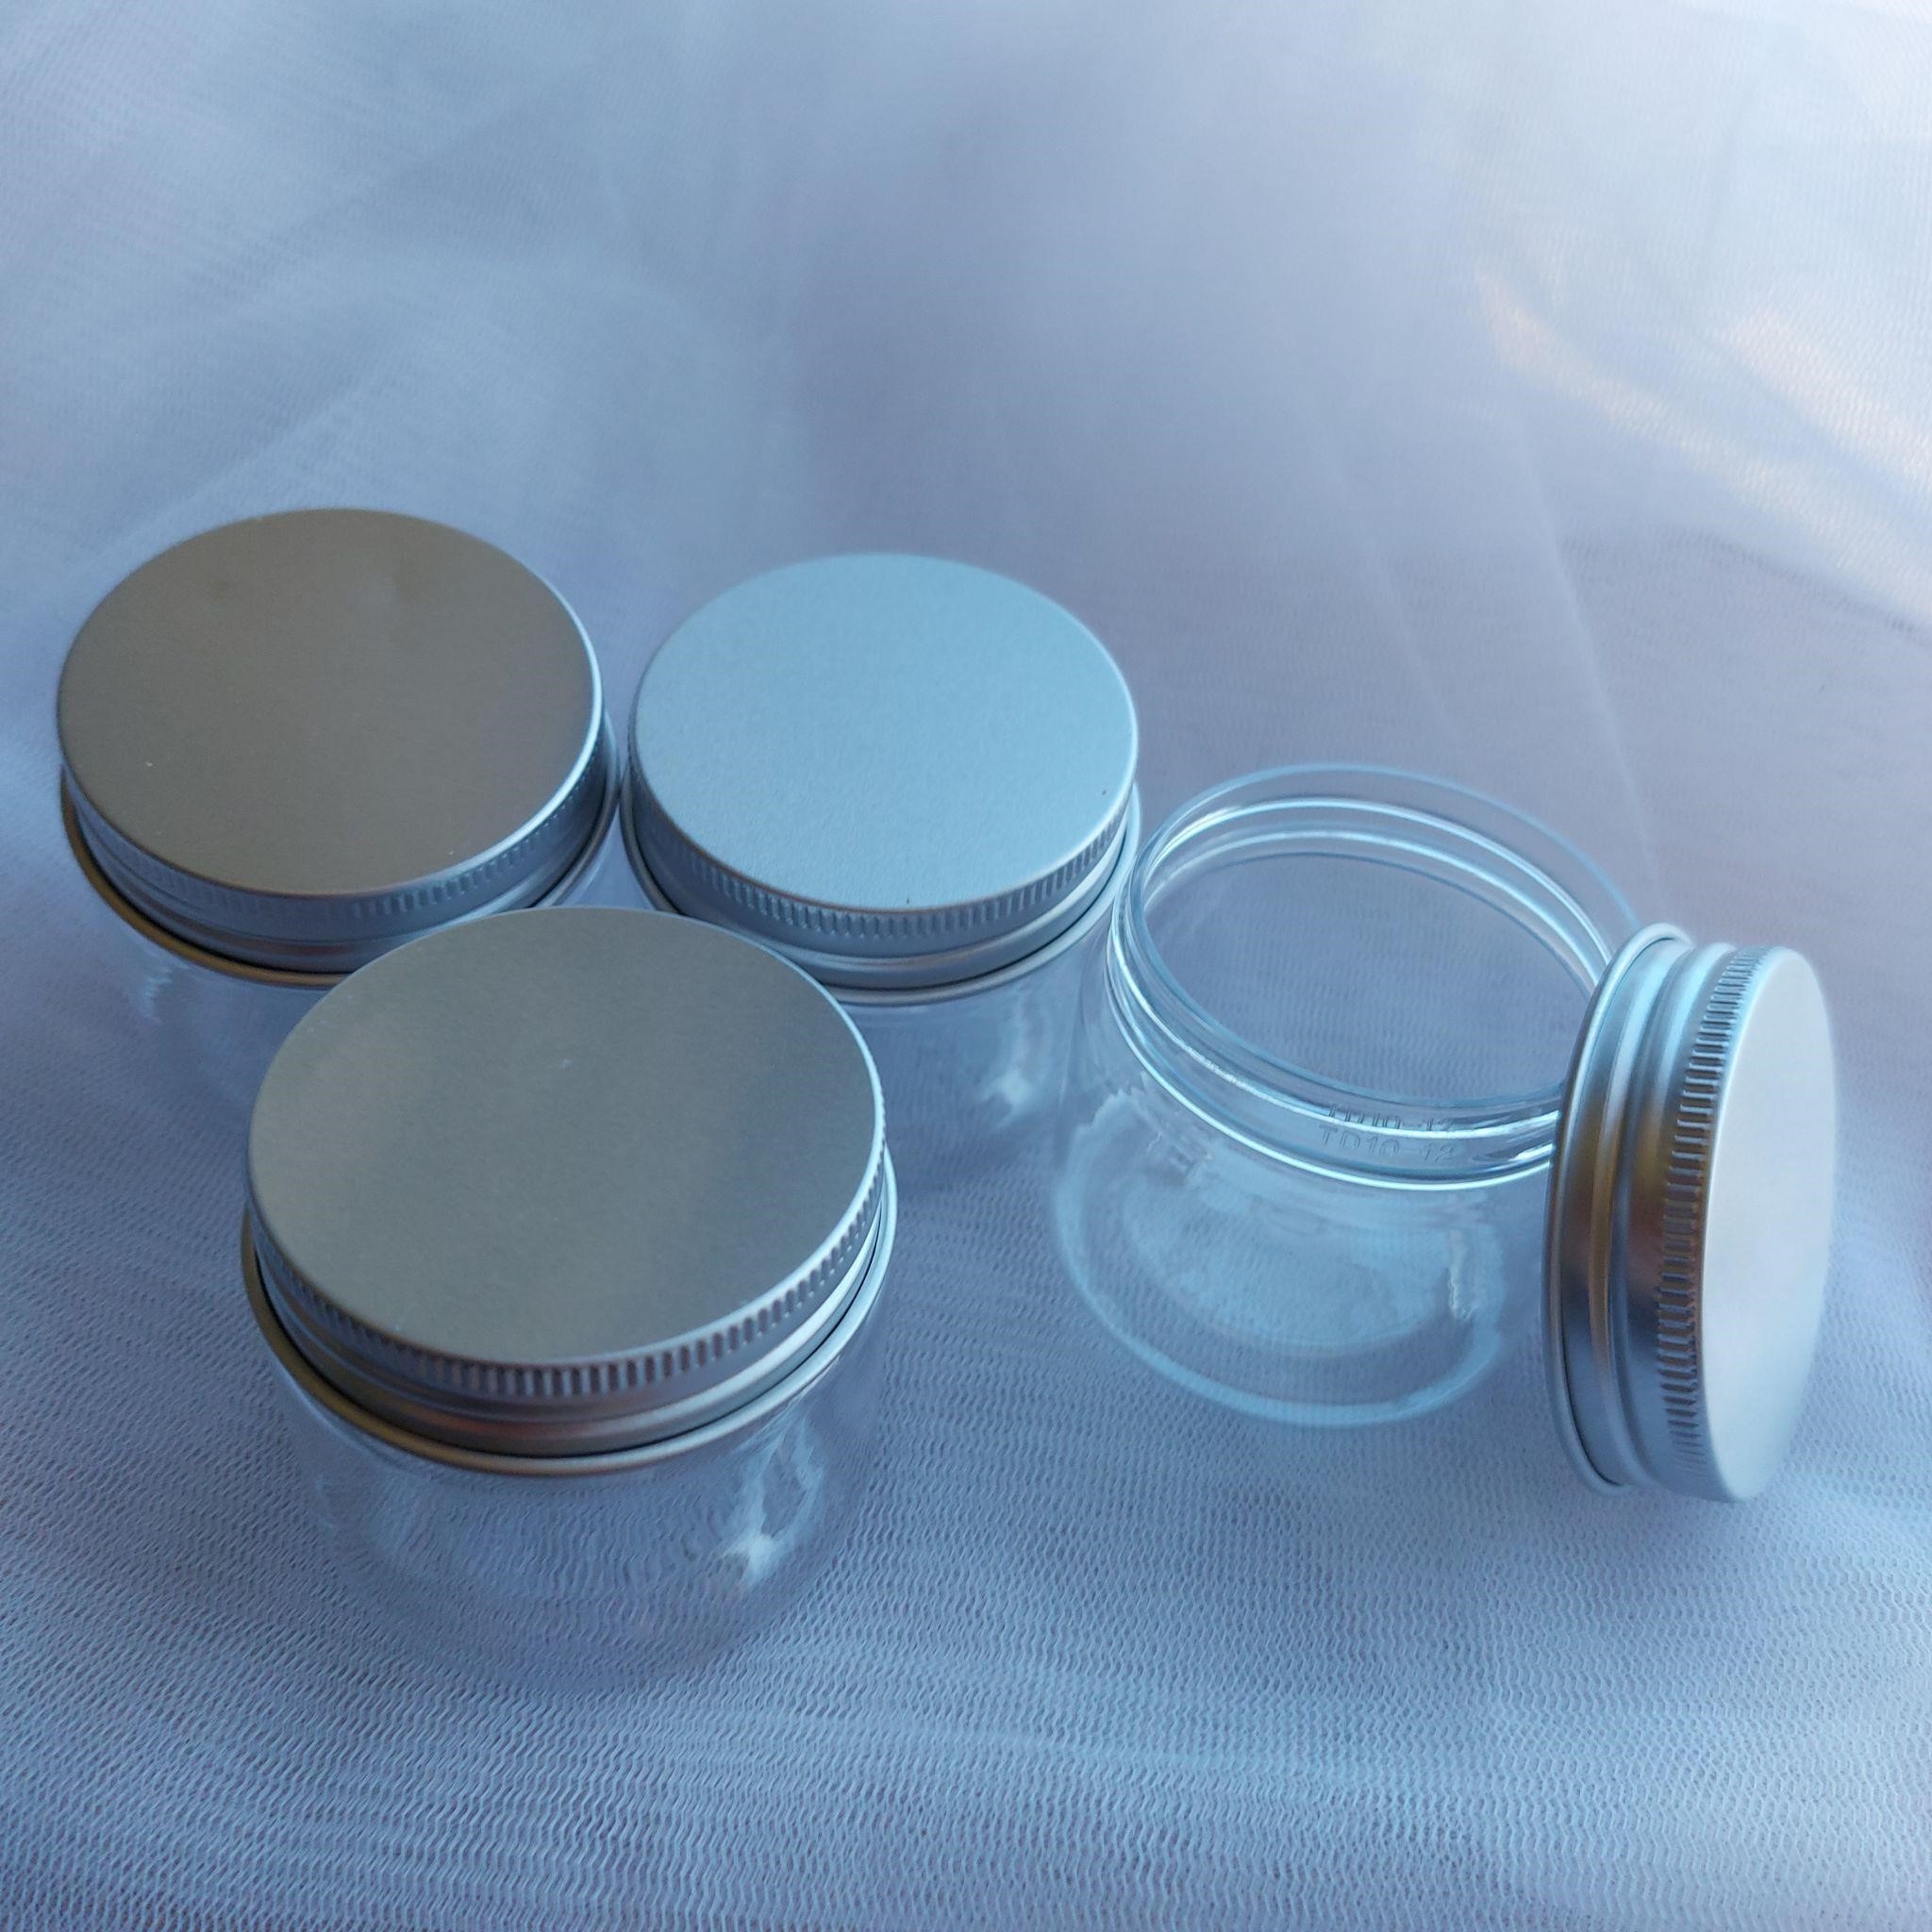 4 x Clear Plastic Jars with Screw on Lids